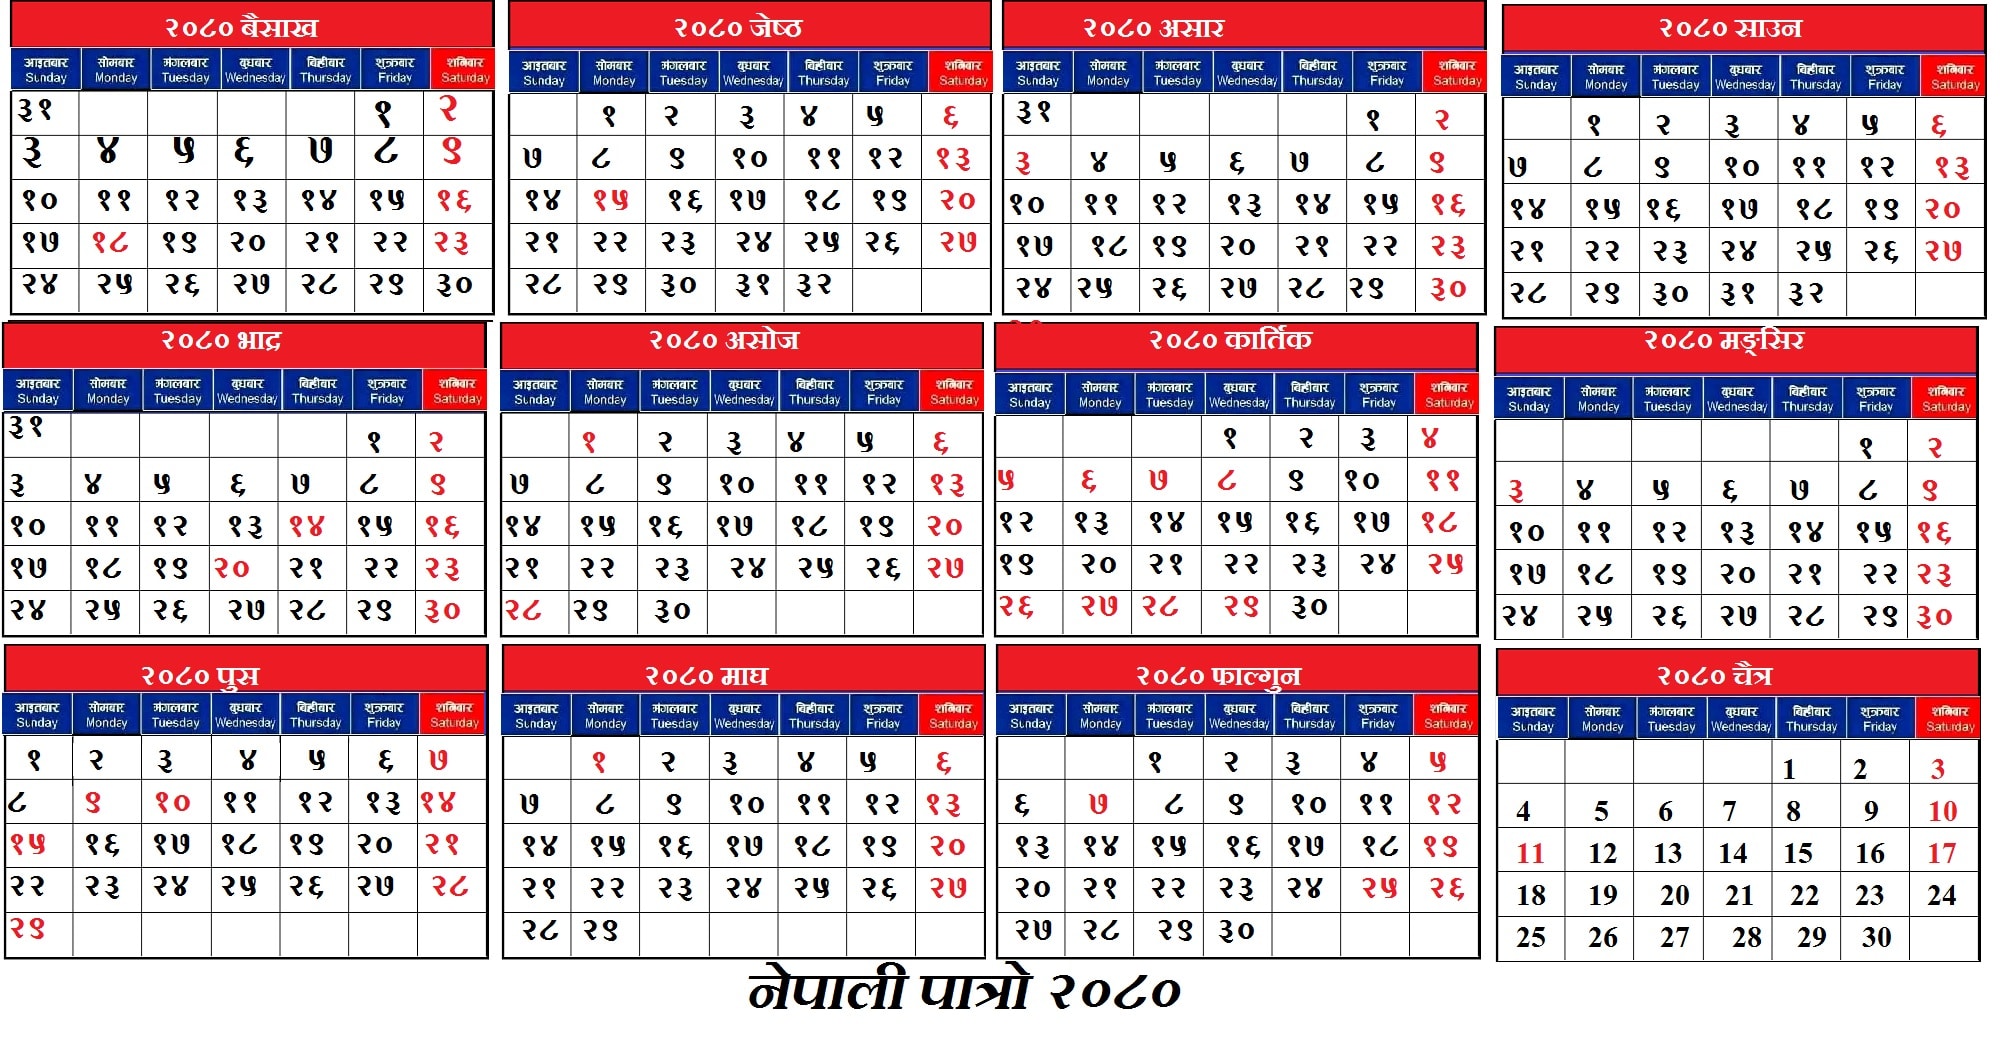 Bikram Sambat: The Traditional Hindu Calendar System and the Nepali New Year Celebration